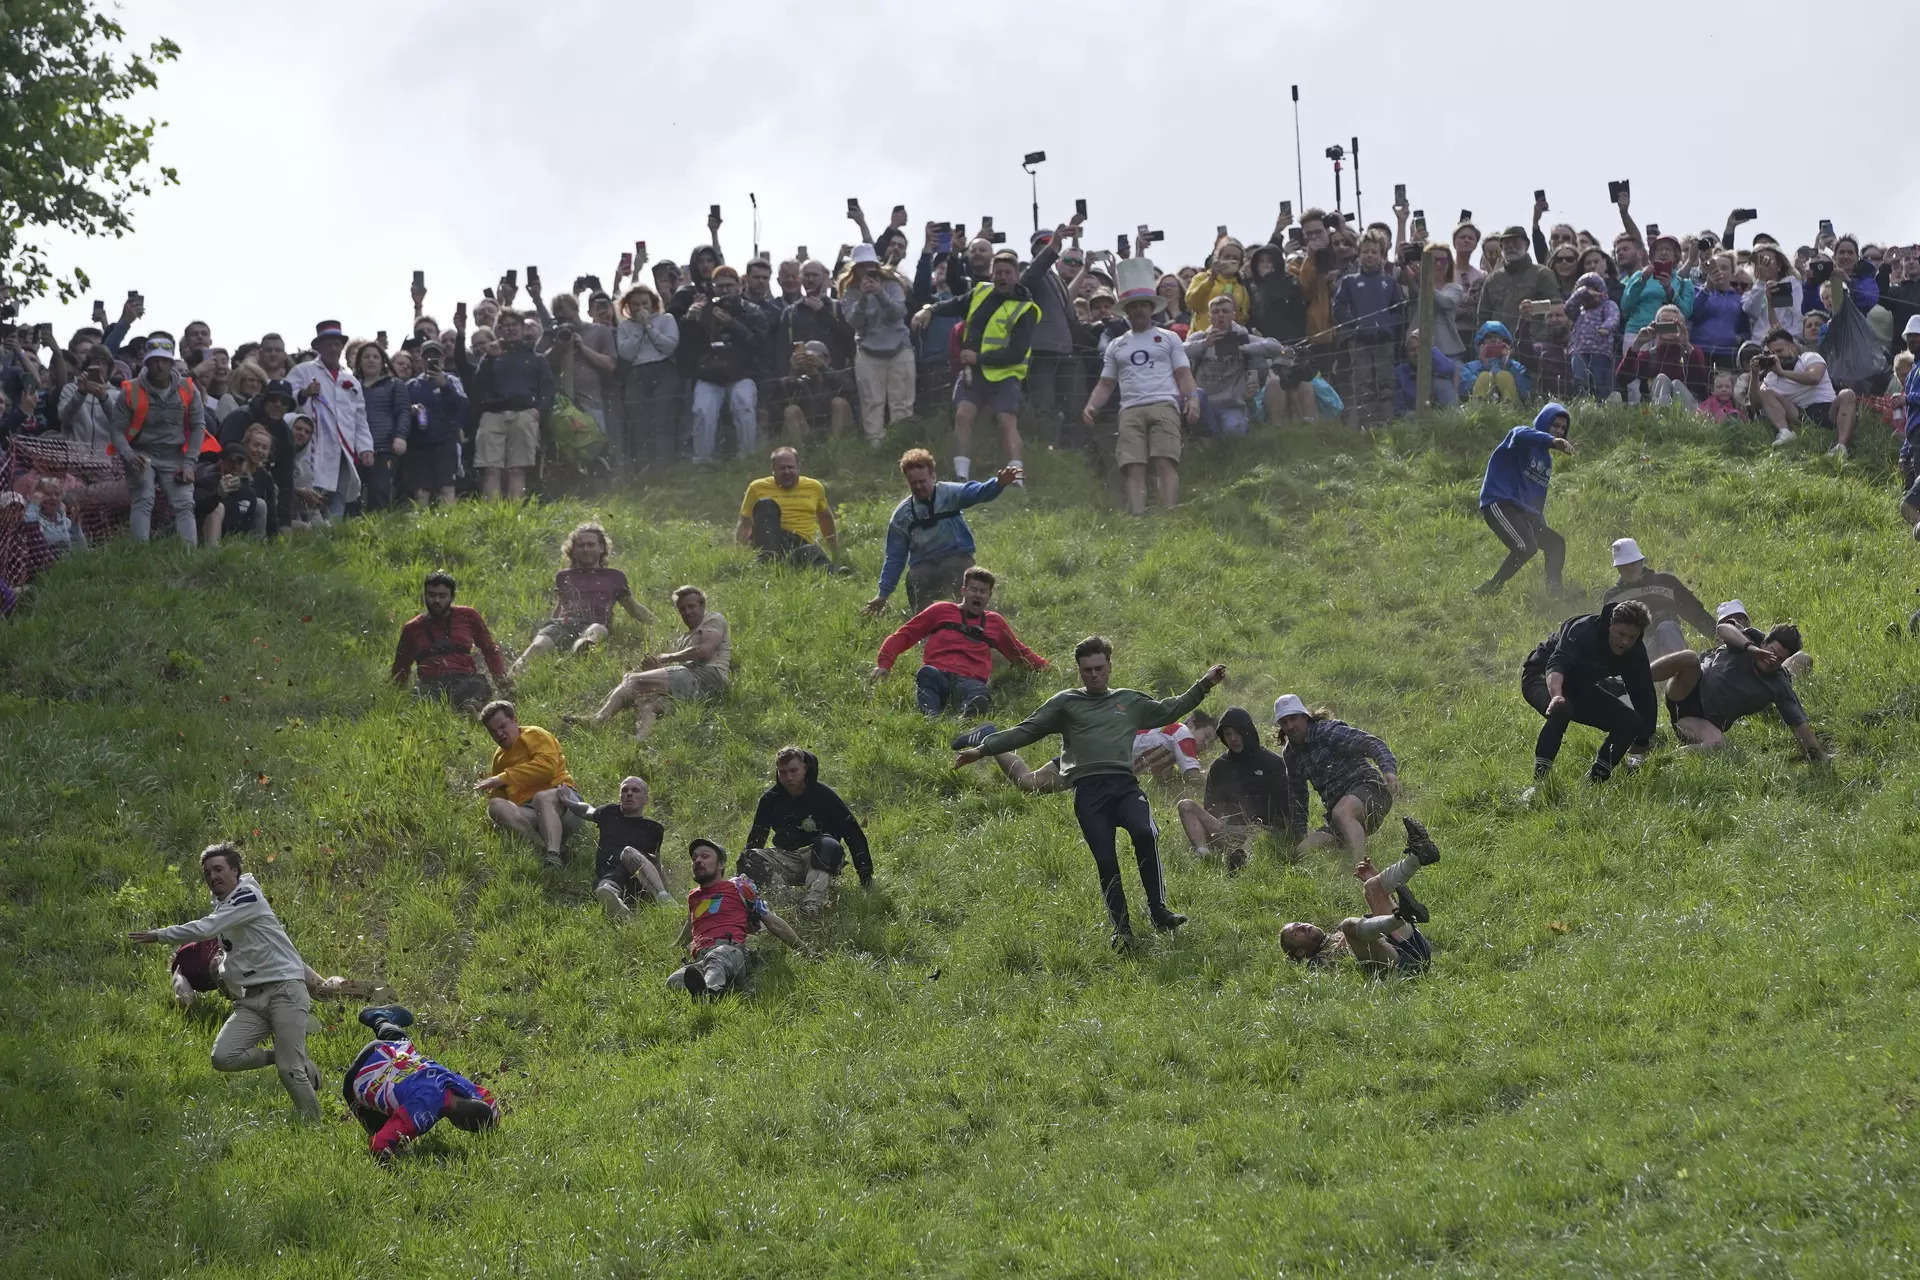 Cheeserolling race draws hundreds of spectators in UK